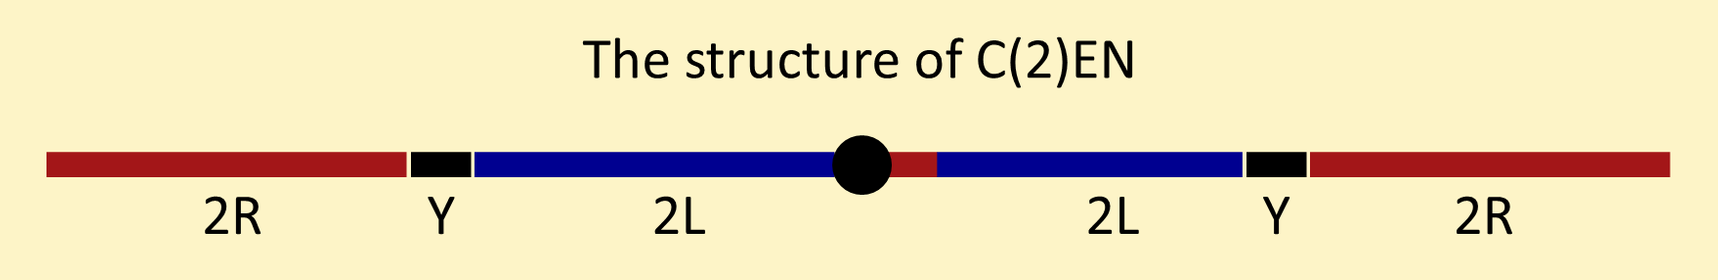 The structure of C(2)EN